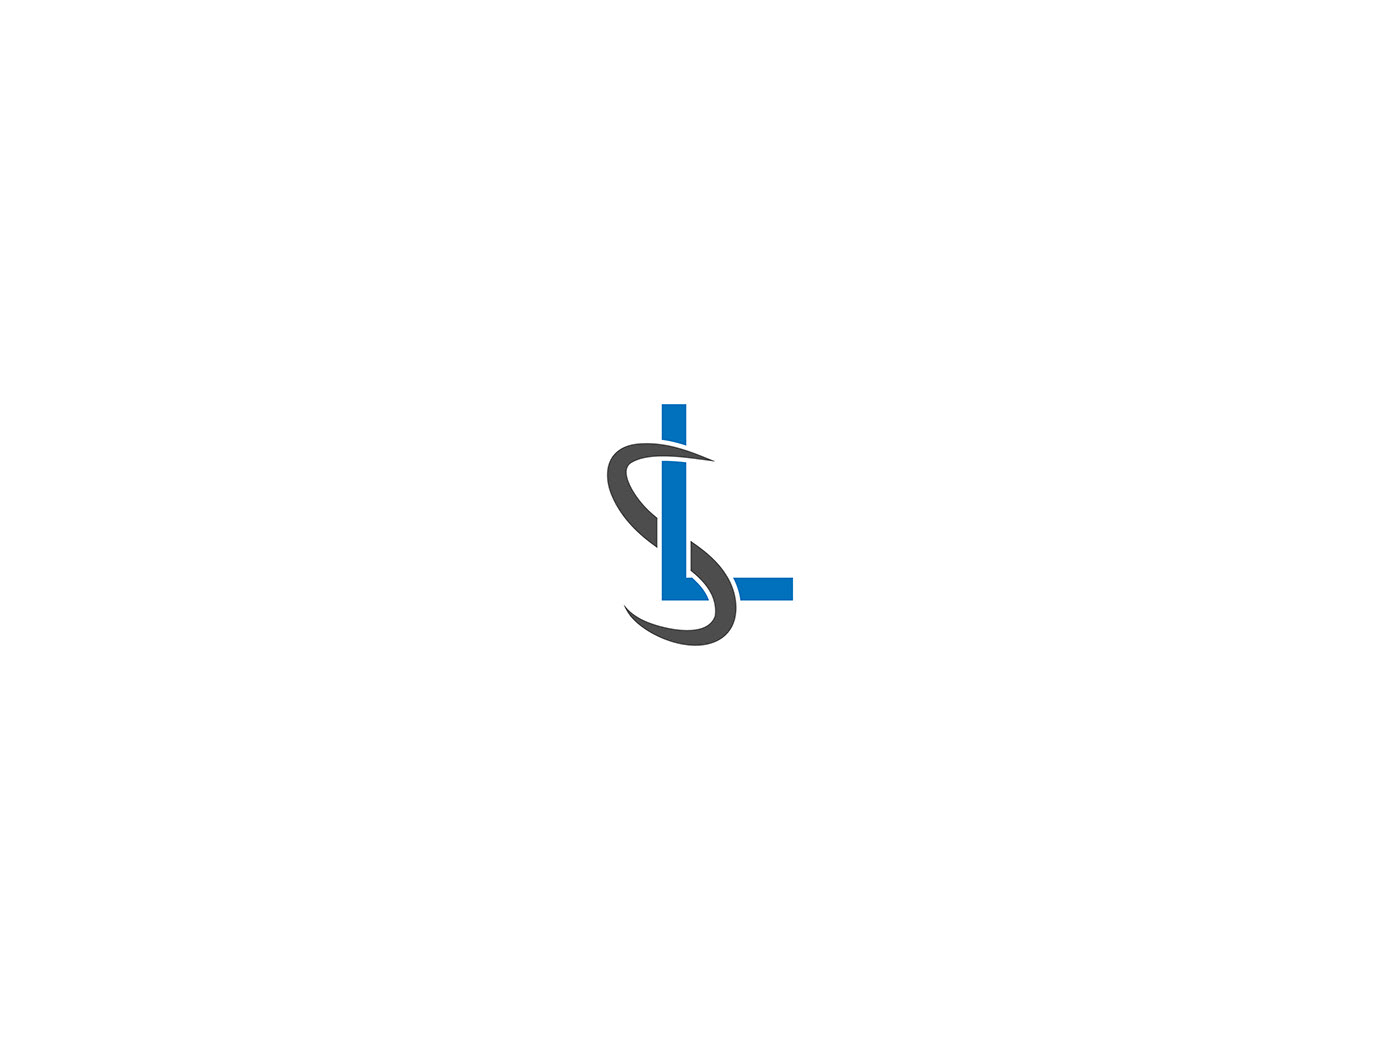 LS logo design modern minimalist logo